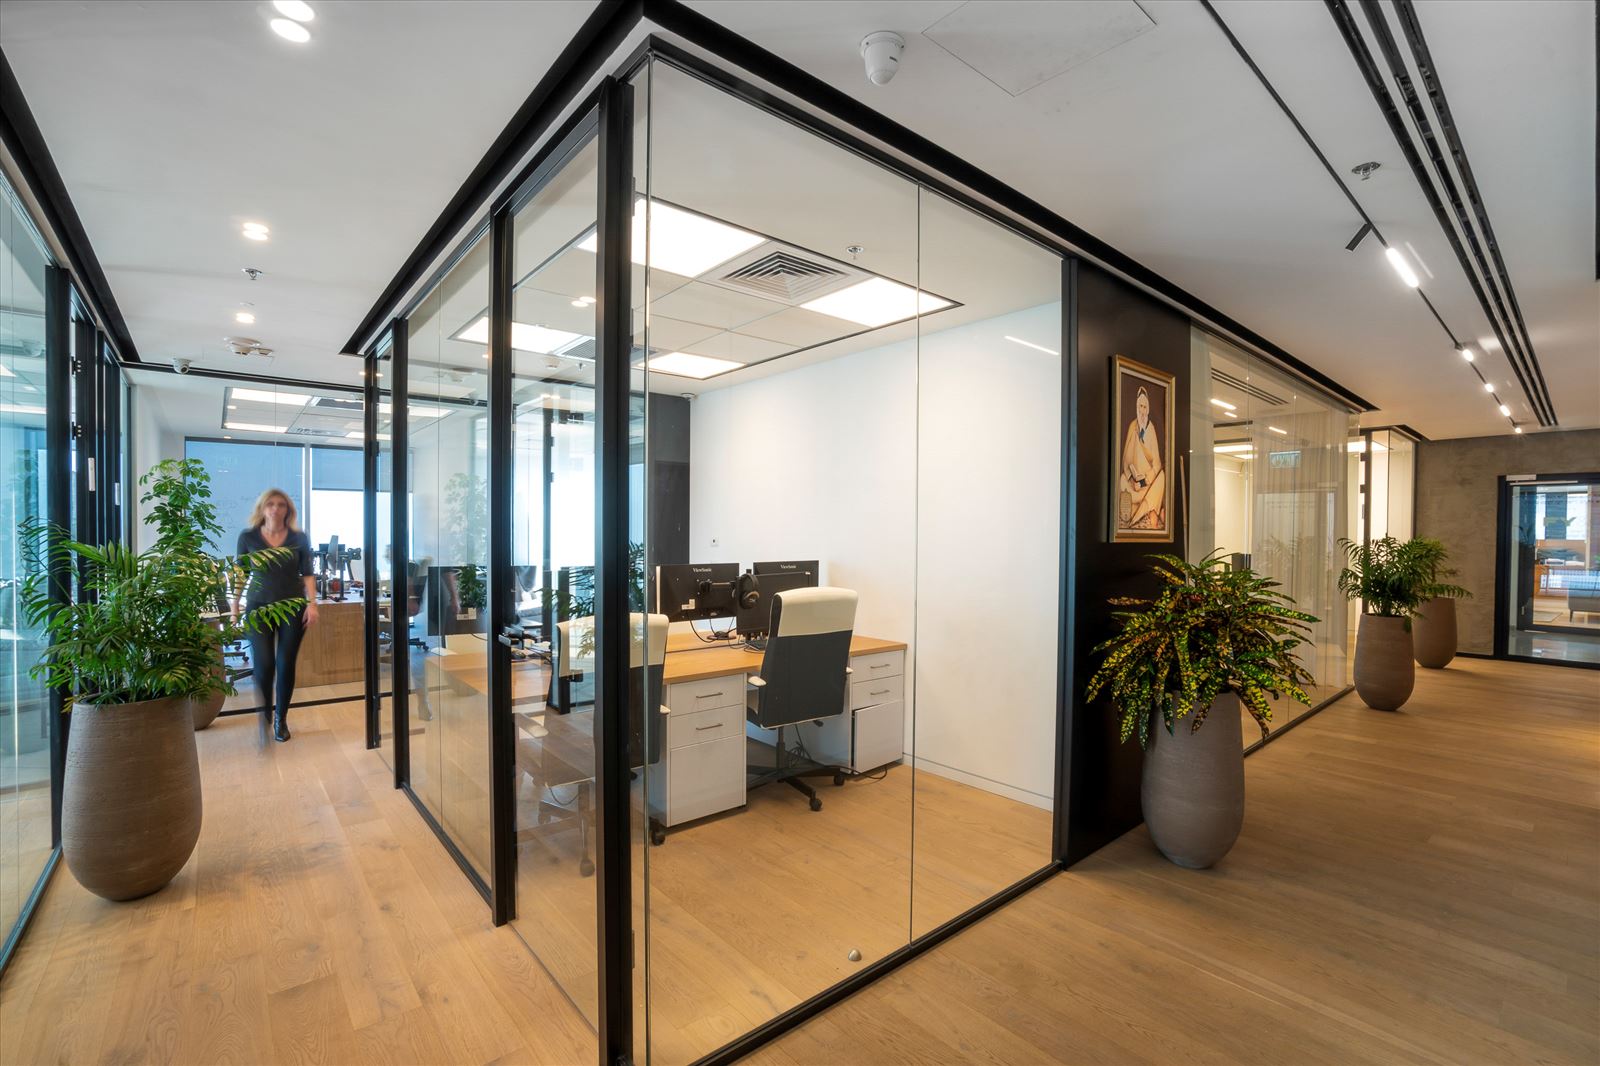 Pie Technology Office - עיצוב תאורת המשרדים על ידי דורי קמחי תאורה אדריכלית